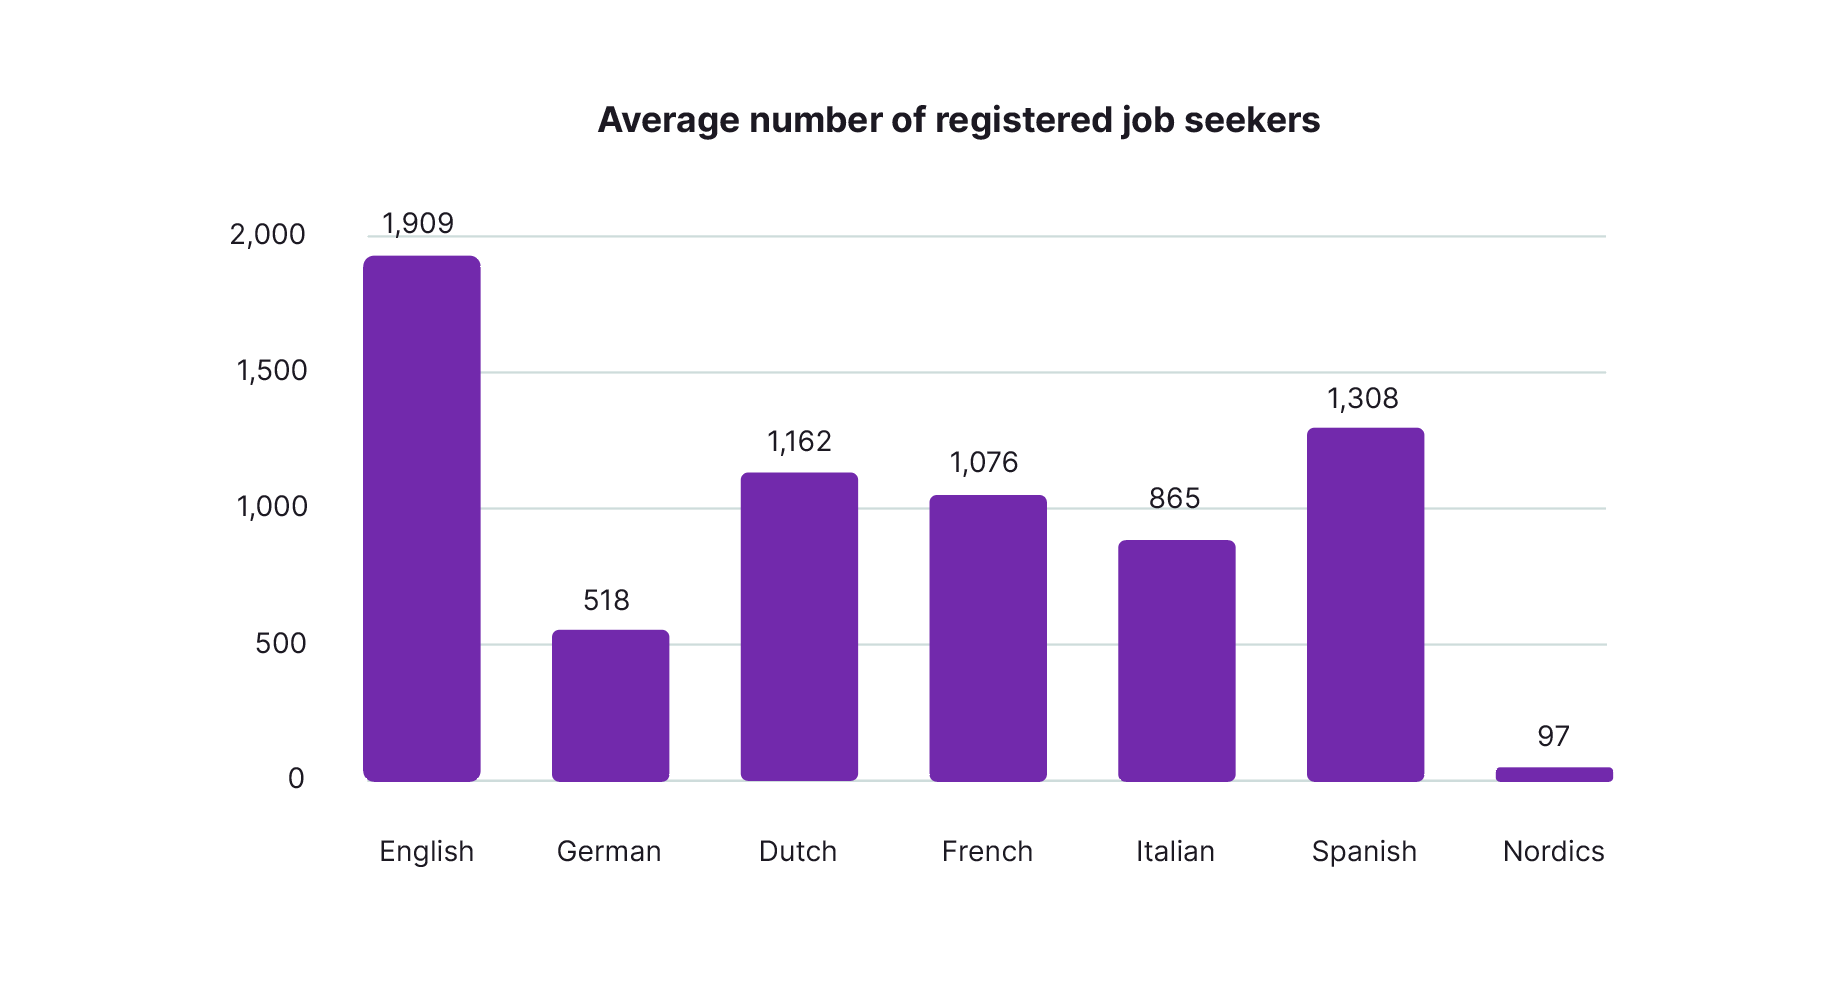 multilingual job seekers in the netherlands